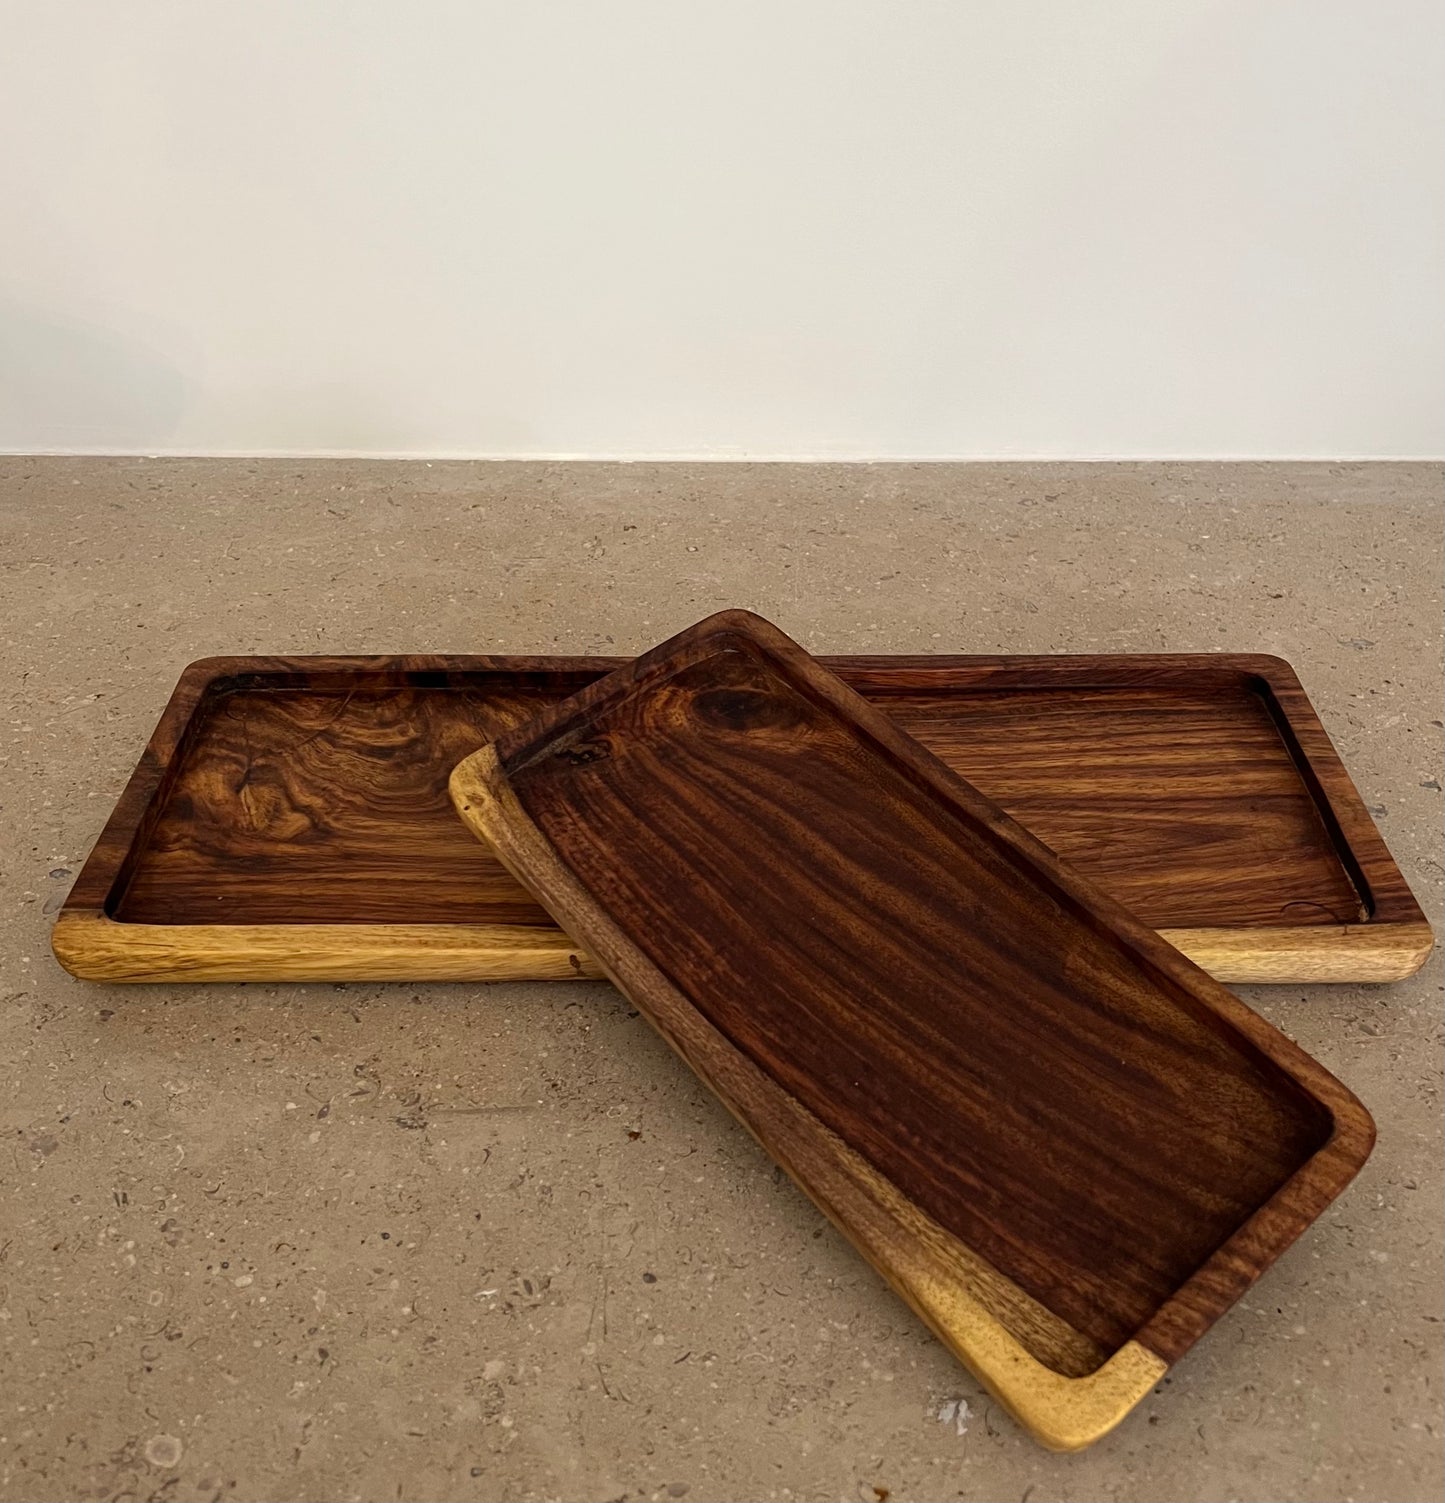 Garsi wood plates